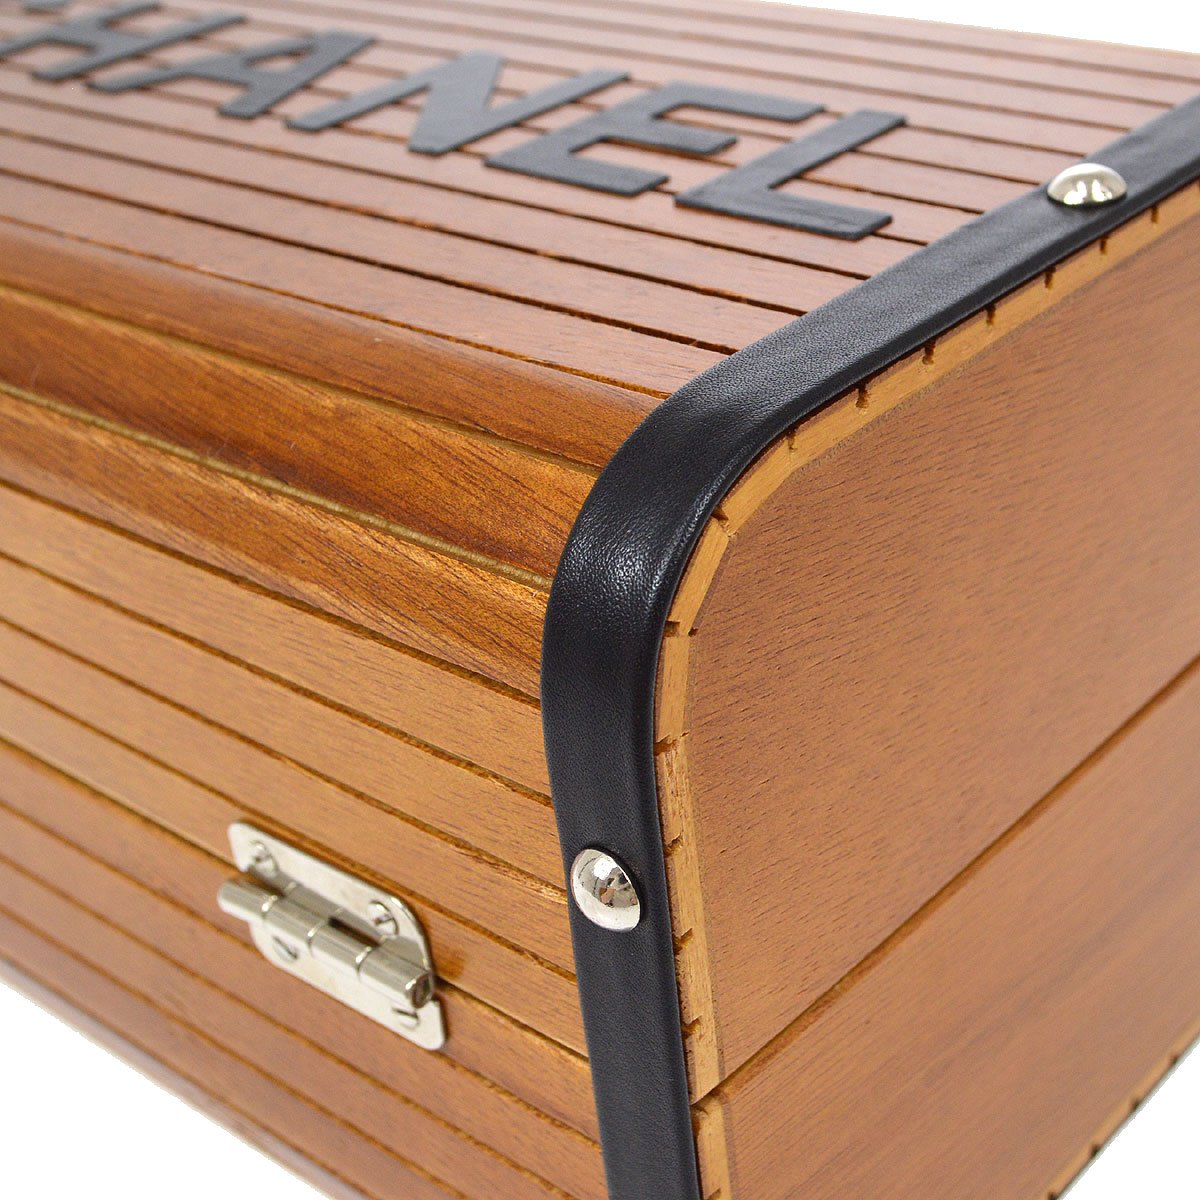 CHANEL * 1994-1996 Wooden Box Handbag 90289